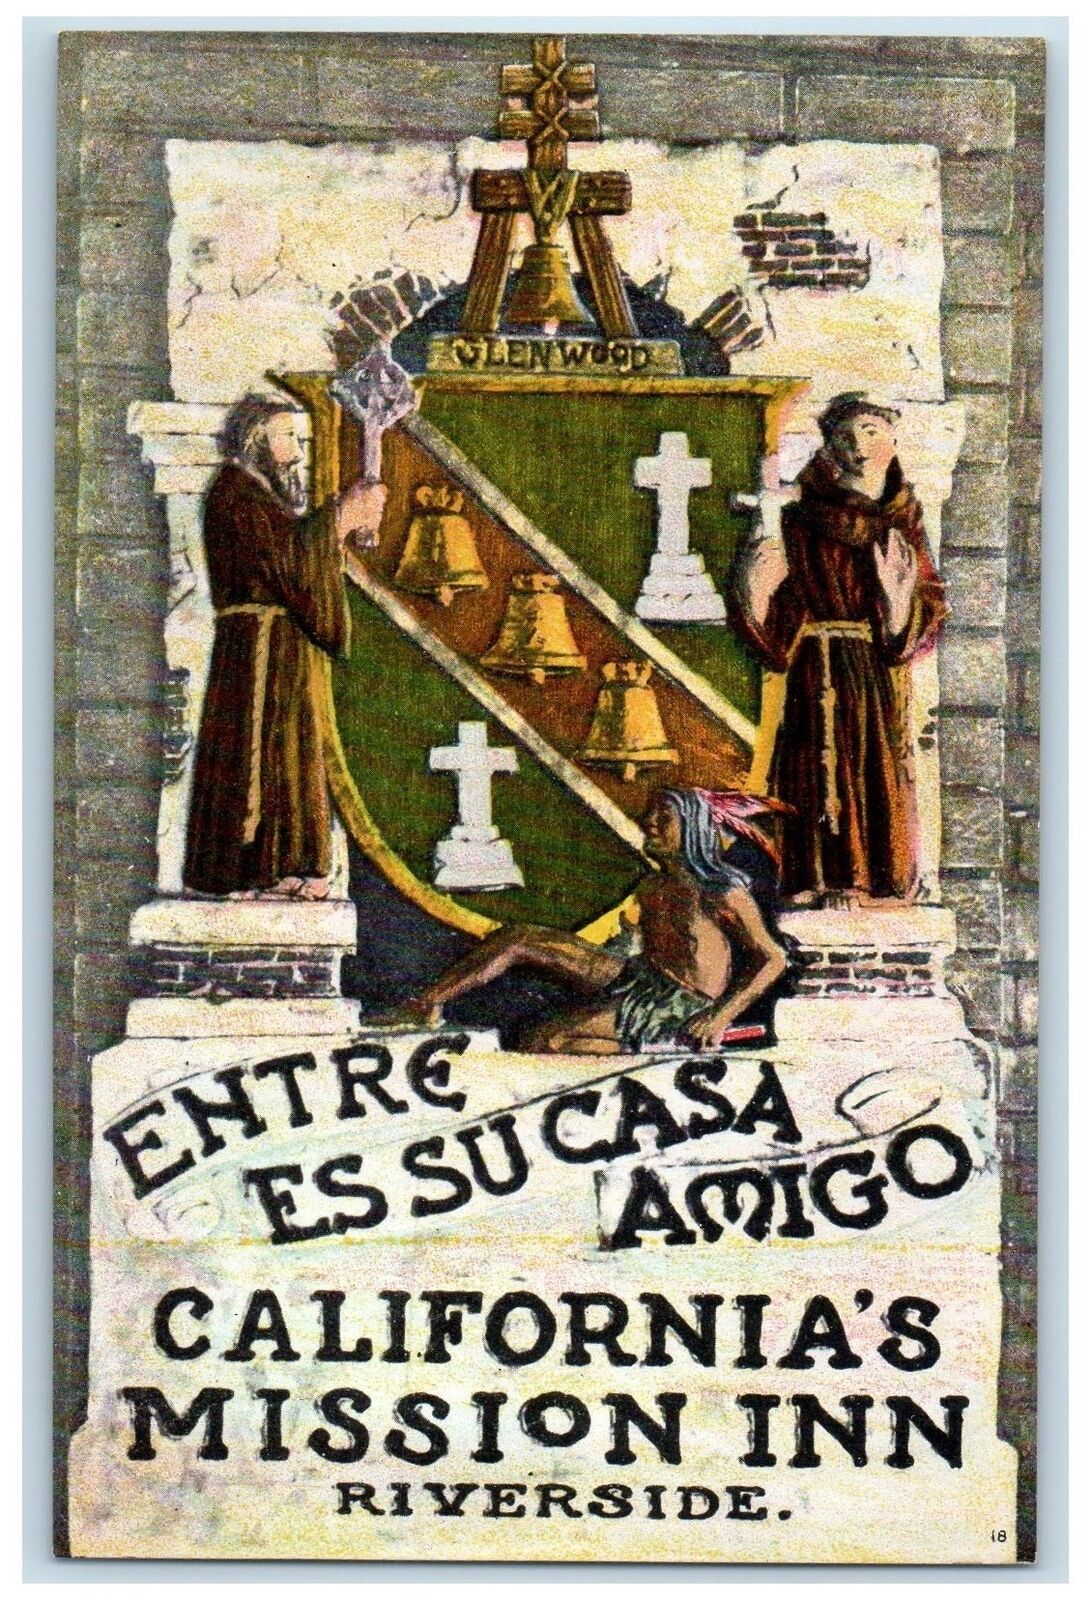 c1950's St. Francis Of Assisi Design Mission Inn Riverside California Postcard